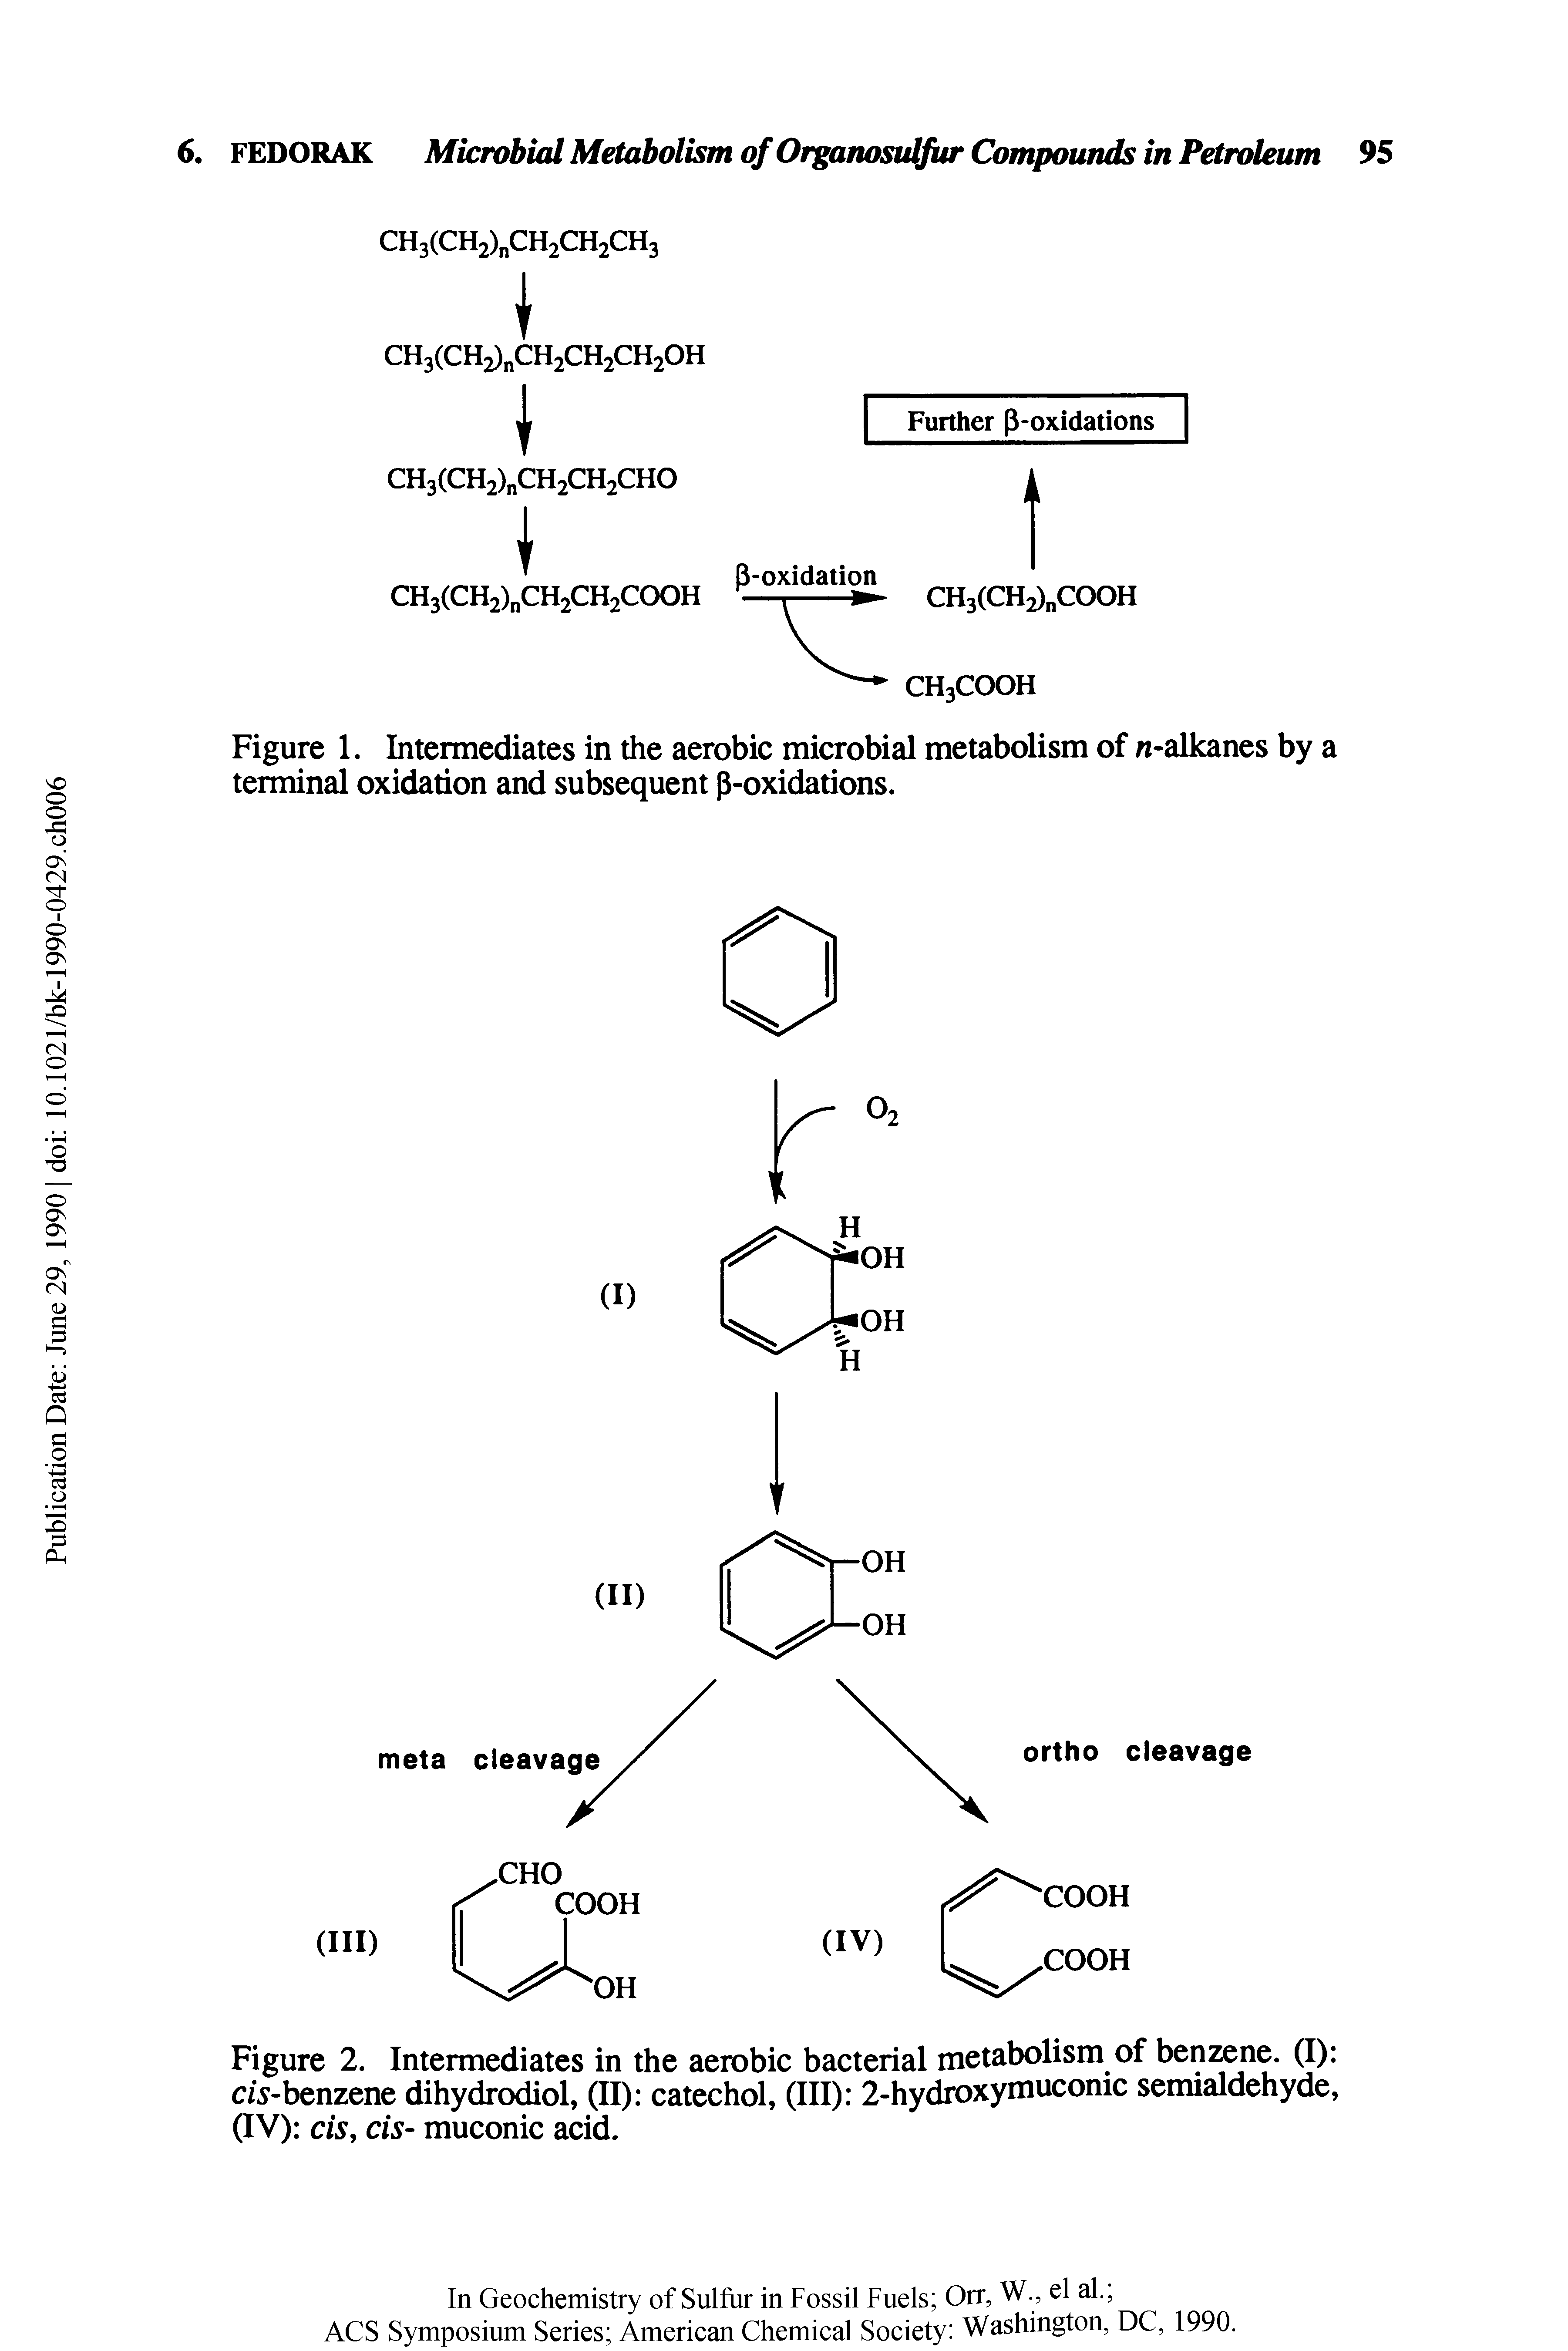 Figure 2. Intermediates in the aerobic bacterial metabolism of benzene. (I) c/s-benzene dihydrodiol, (II) catechol, (III) 2-hydroxymuconic semialdehyde, (IV) cis, cis- muconic acid.